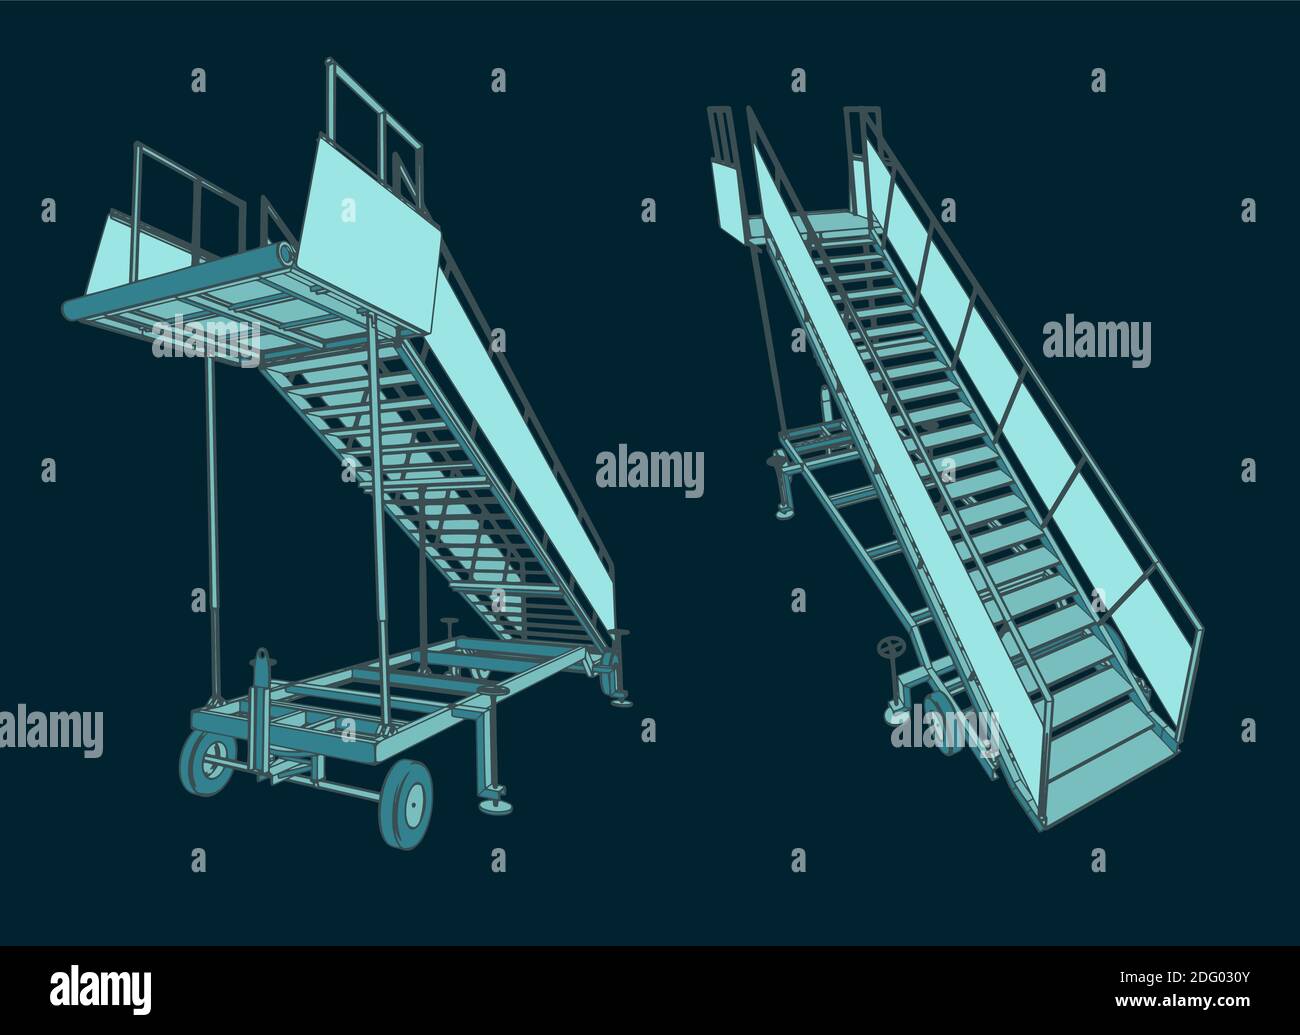 Stylized vector illustration of airplane ladder cartoon illustrations Stock Vector